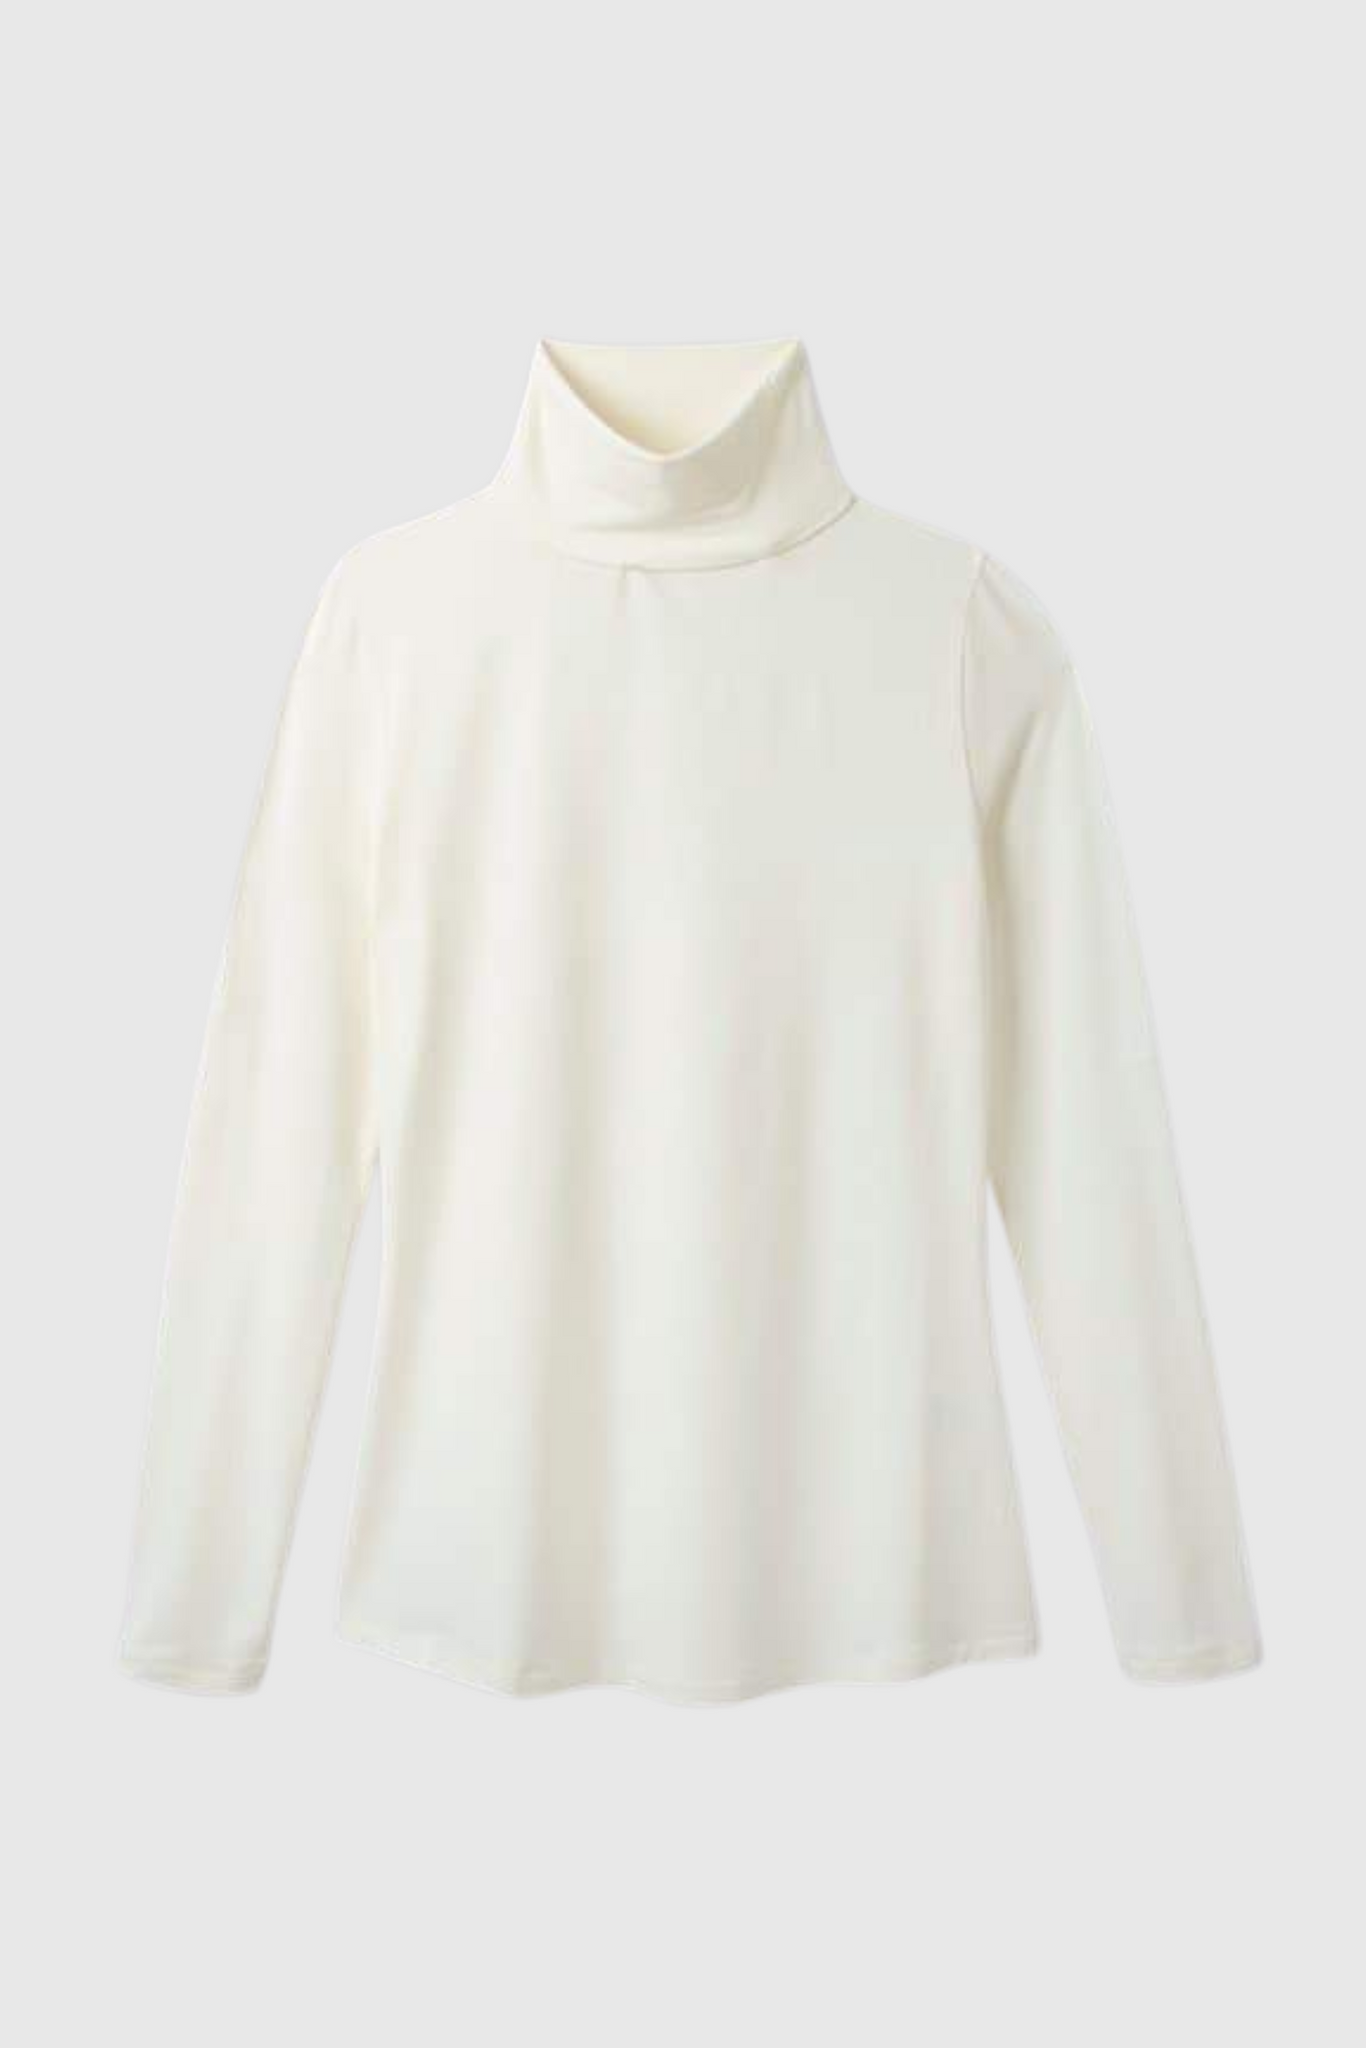 Roll Neck Micro Modal Top Women's Long Sleeve T-shirt Lavender Hill